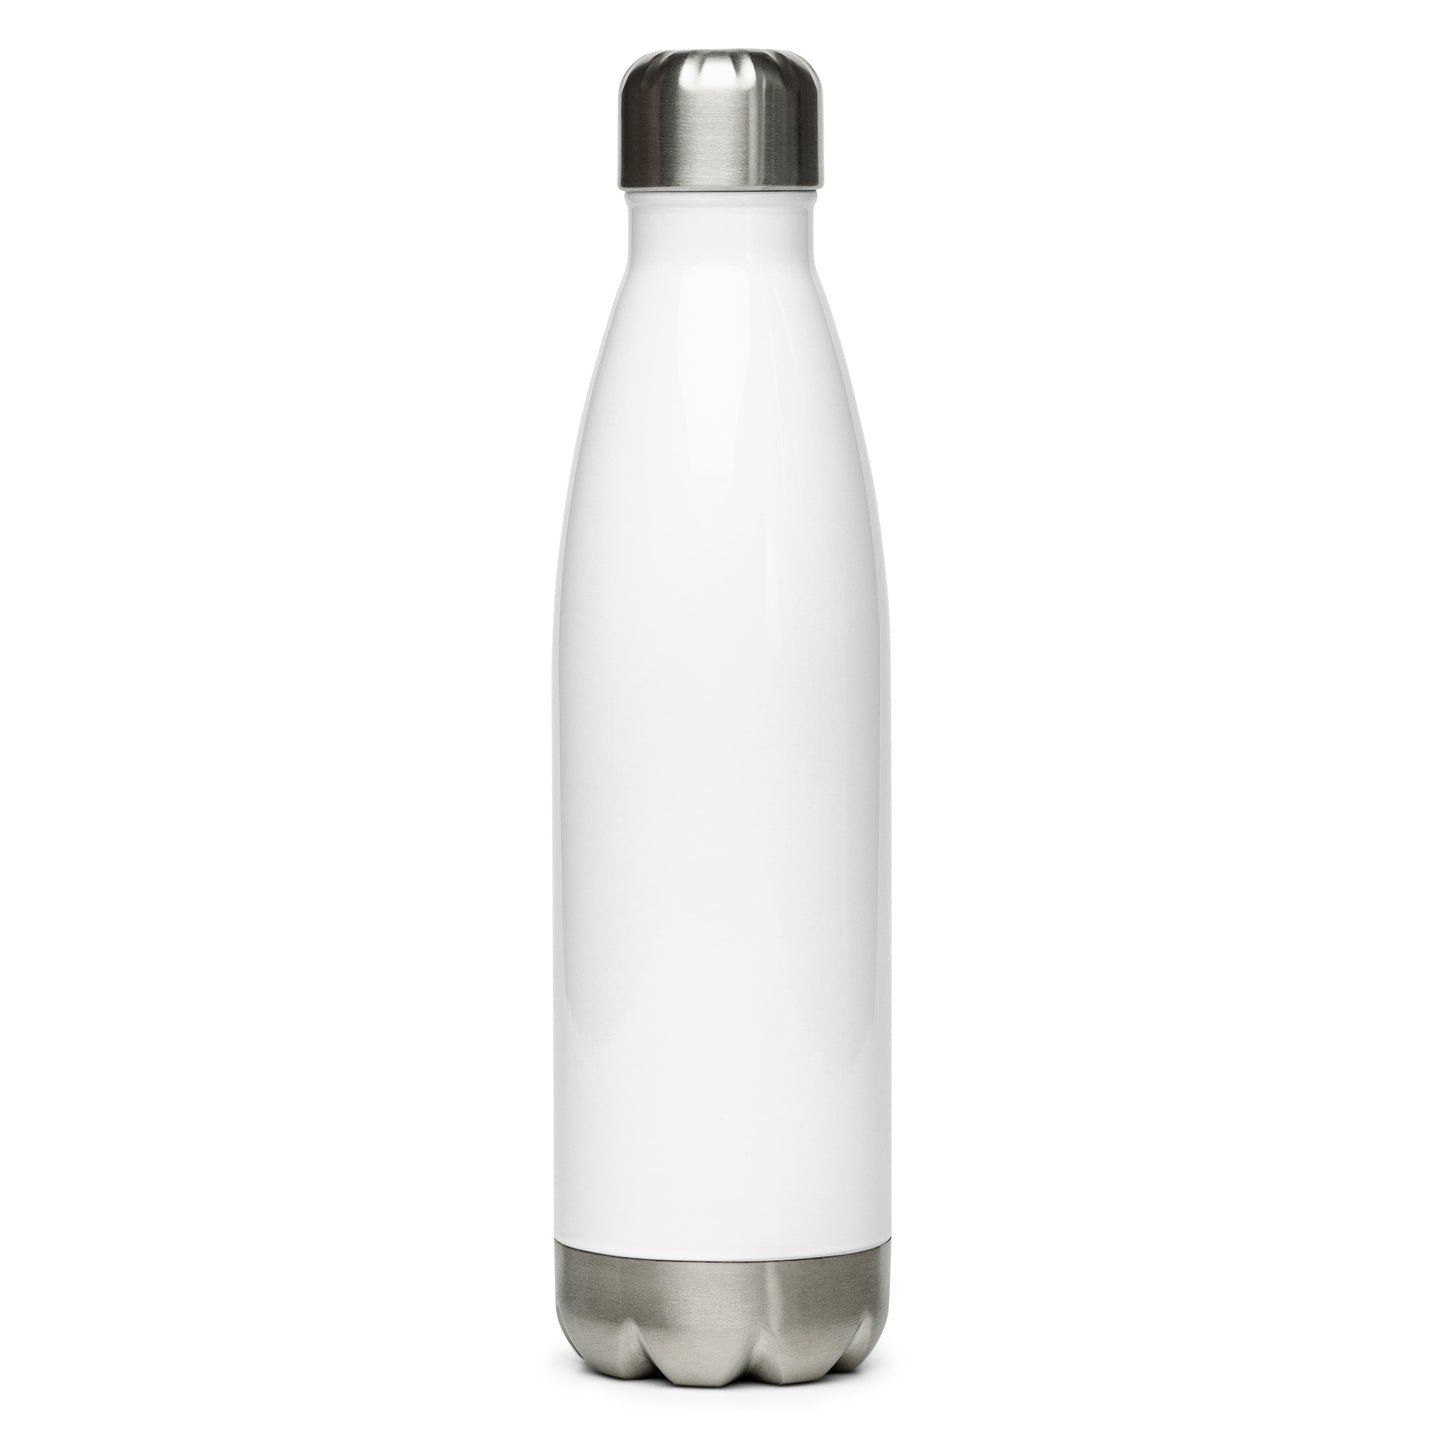 Mr TravelON Stainless Steel Water Bottle